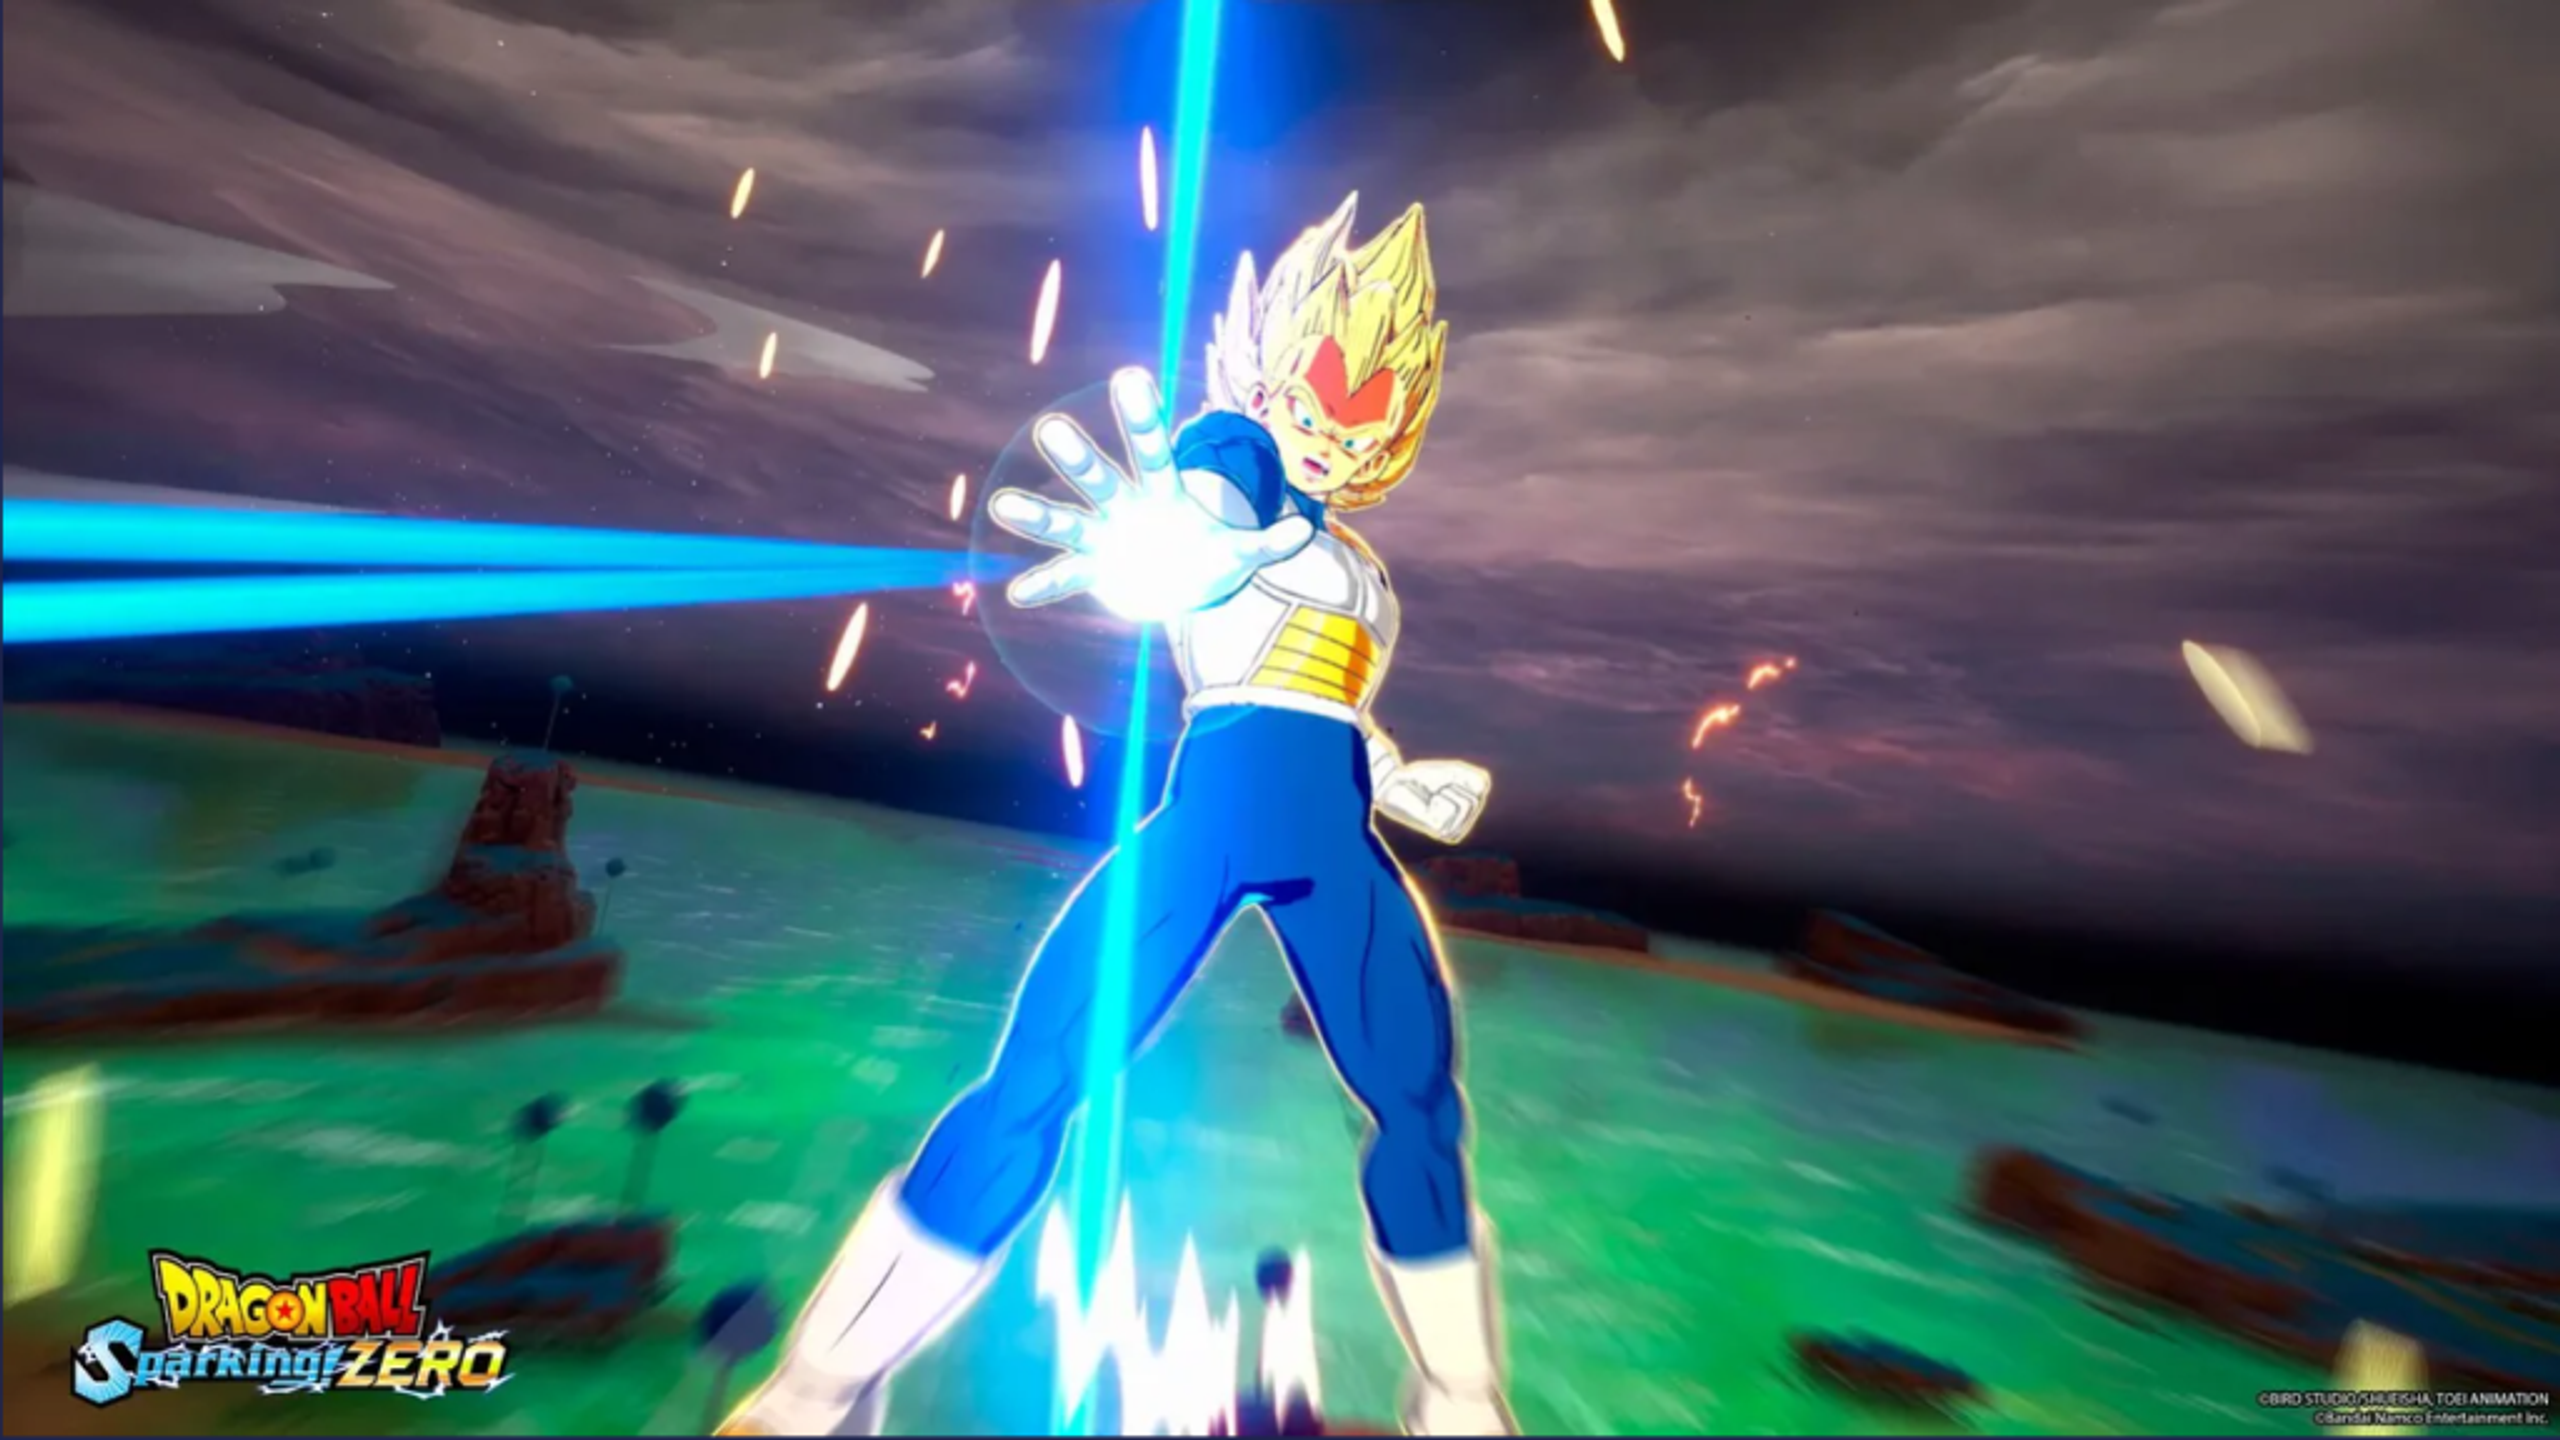 Goku & Vegeta Battle Once More In Dragon Ball: Sparking! Zero